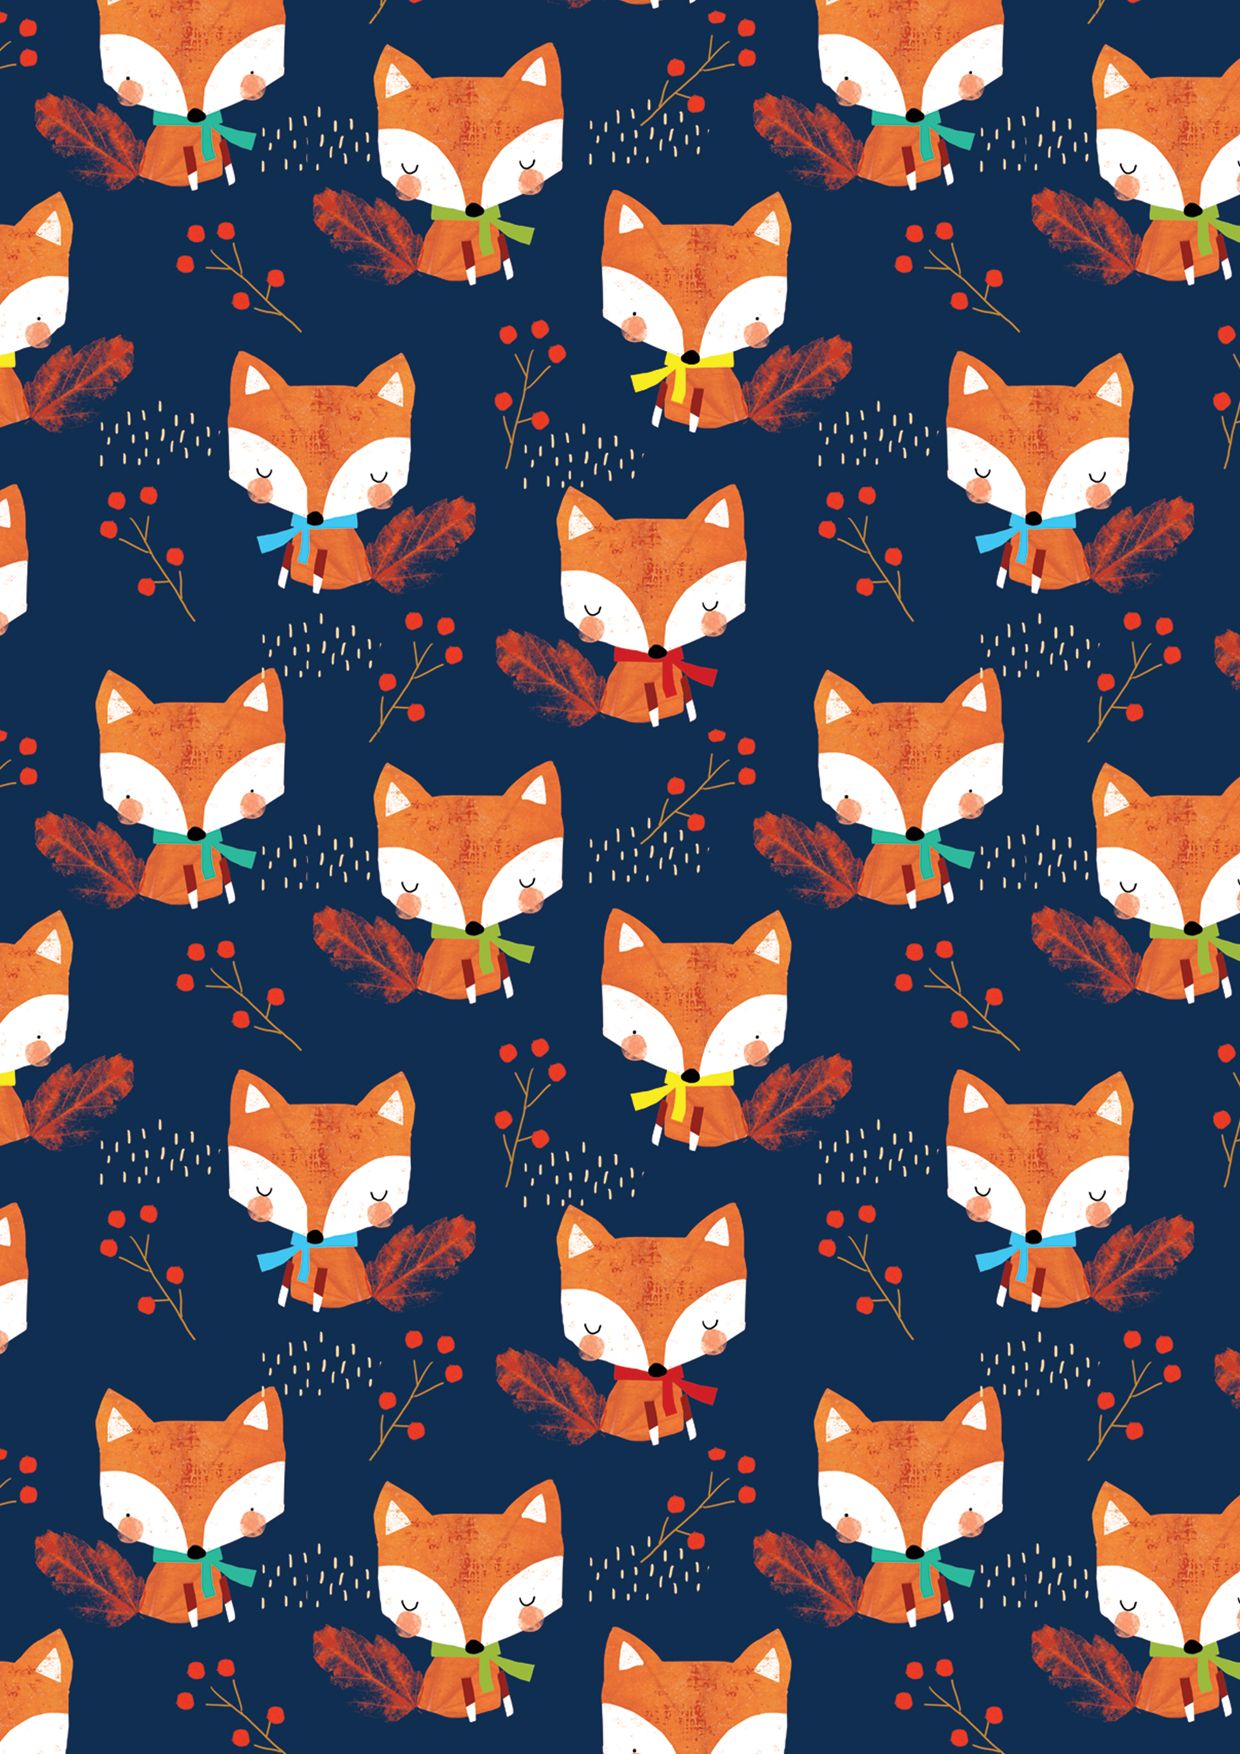 alex willmore alternative version of autumn fox pattern medium